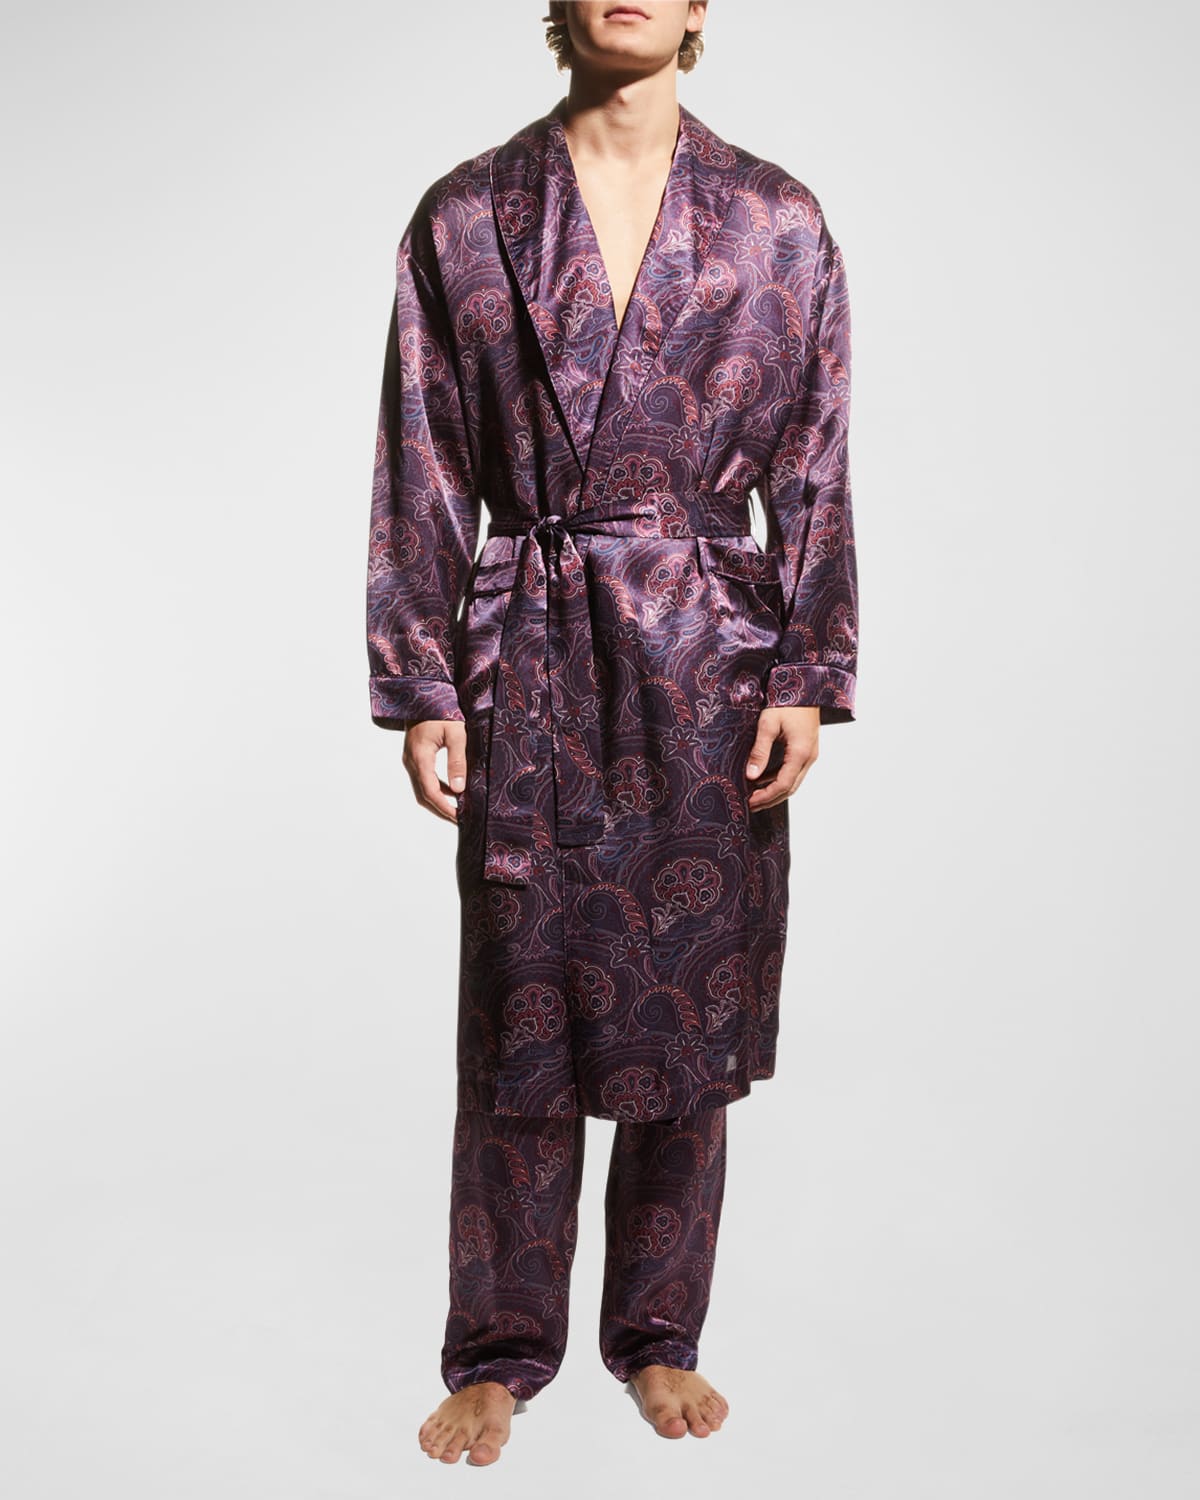 Majestic International Men's Silk Paisley Shawl Robe